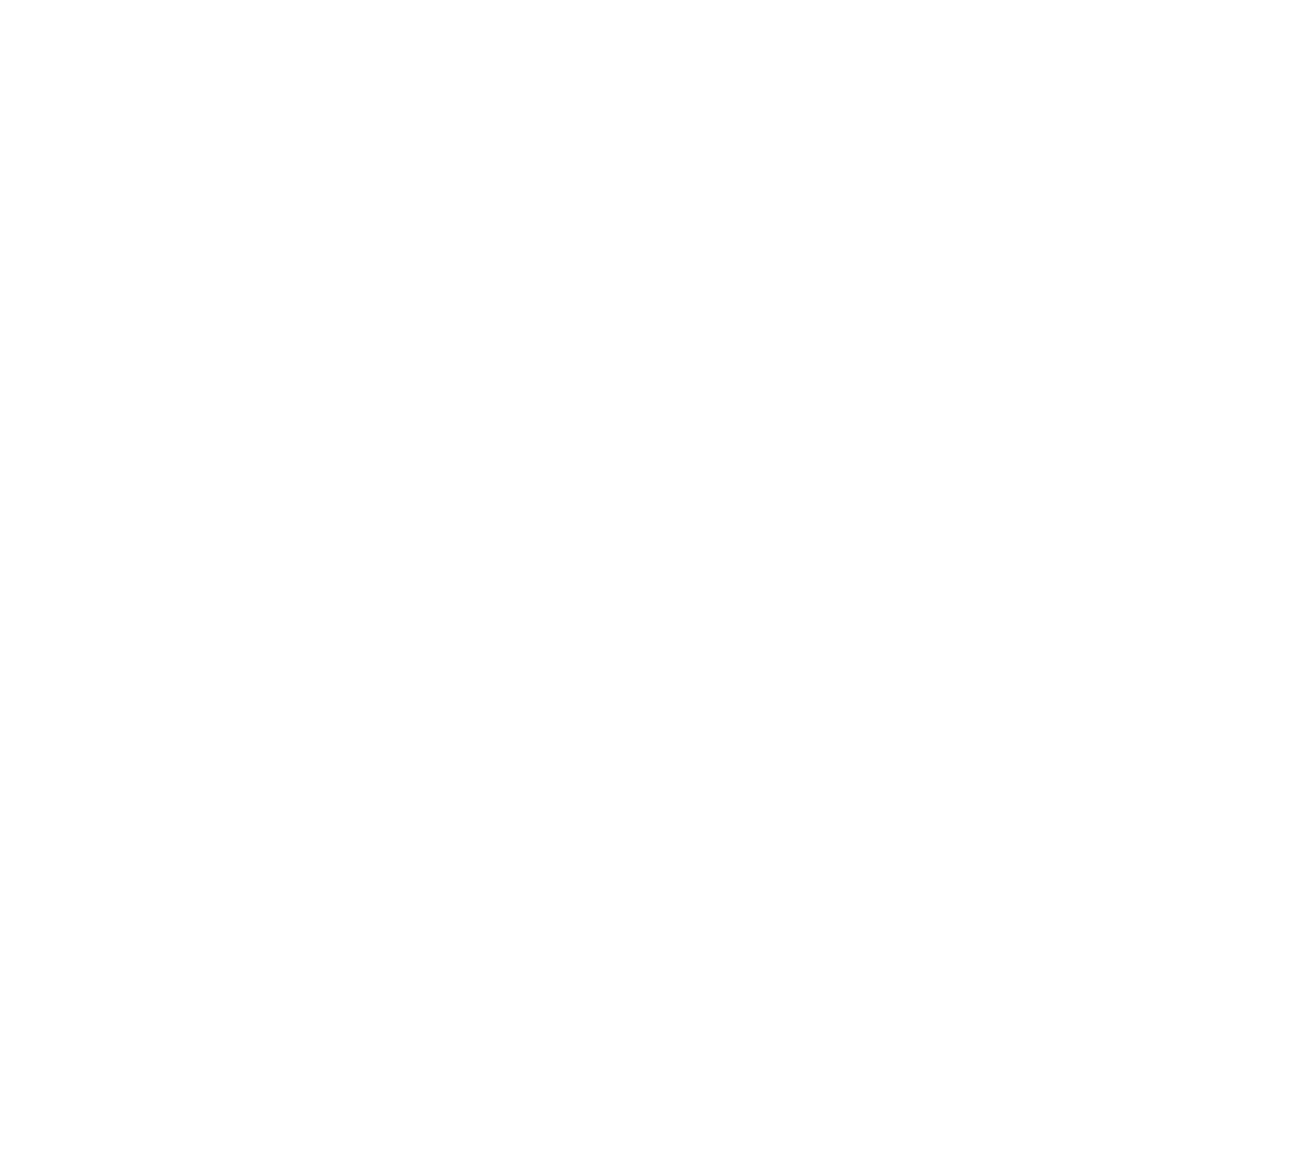 Devuego awards Best Jam Game winner